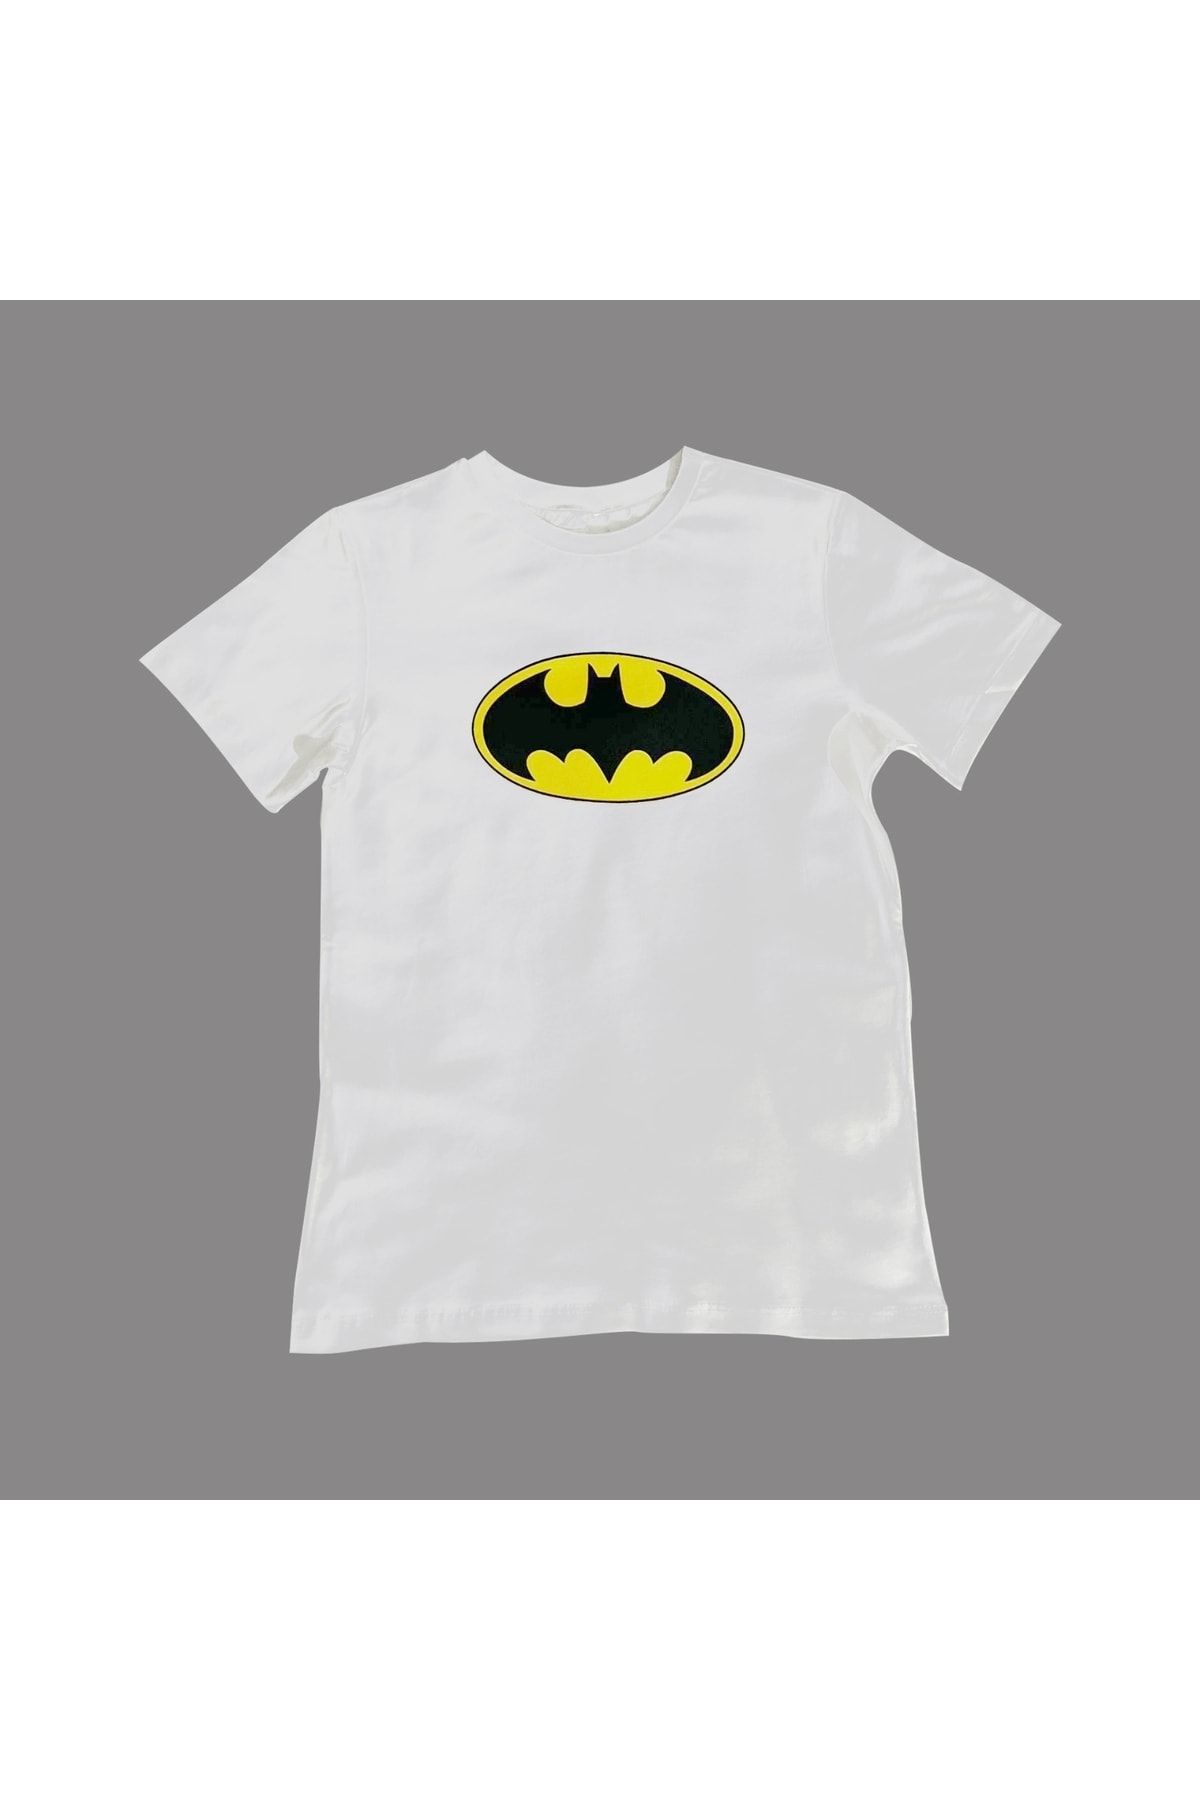 Batman Tshirt %100 Pamuklu Beyaz Kısa Kollu Çocuk Tshirt Basklı